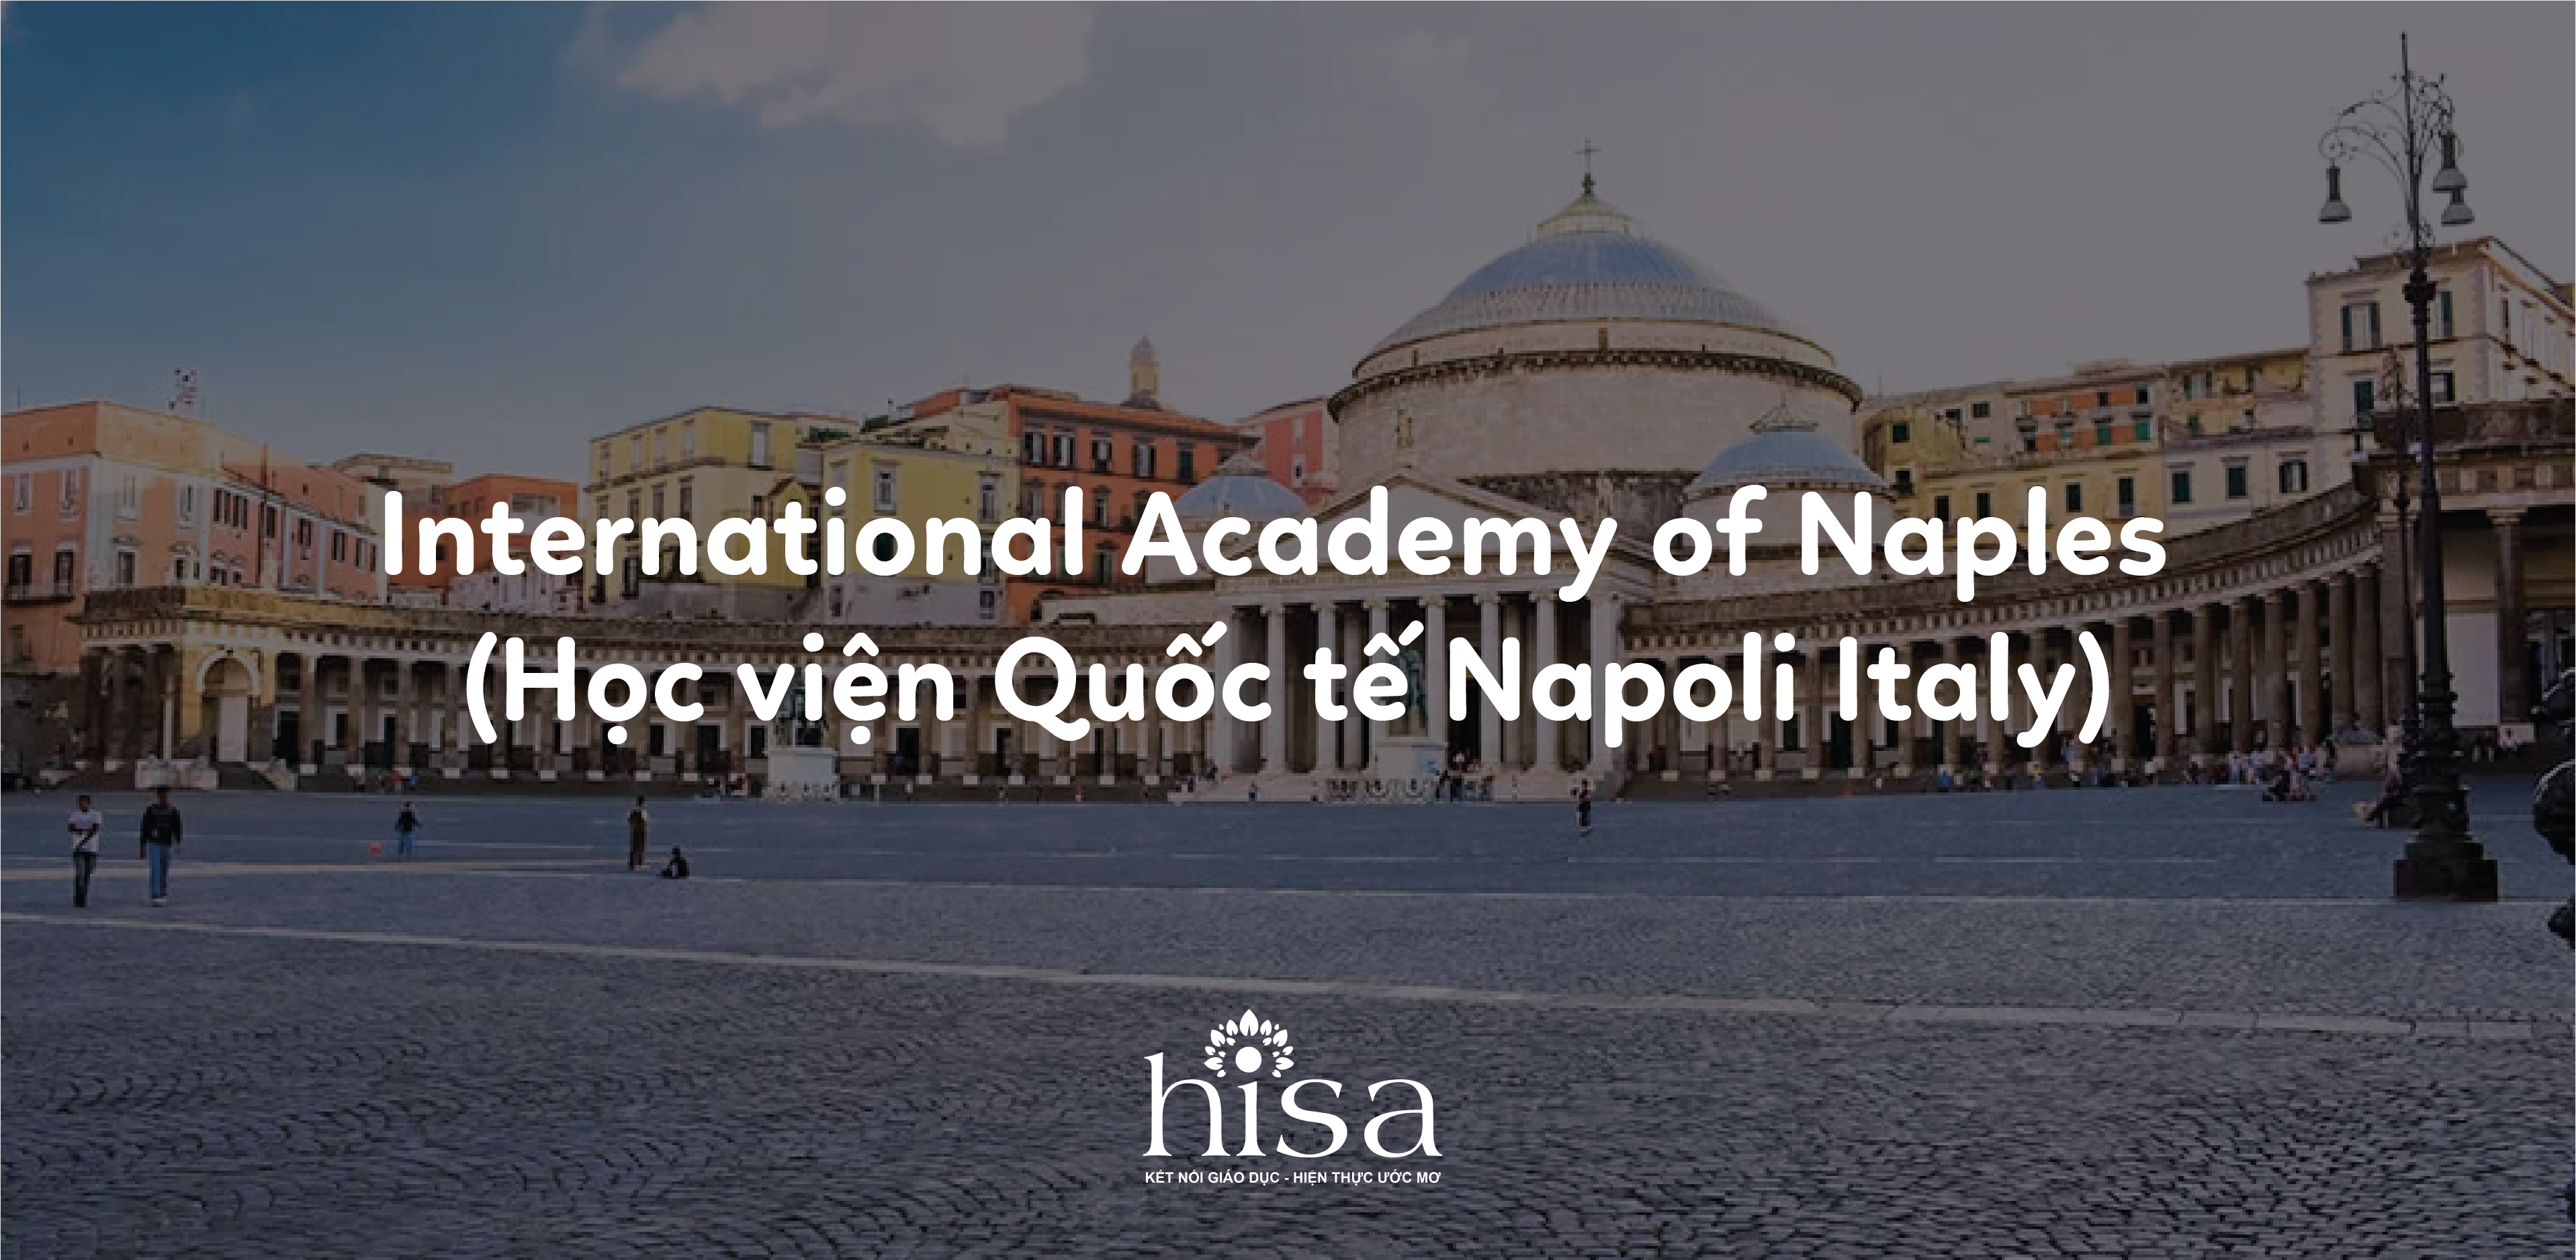 International Academy of Naples (Học viện Quốc tế Napoli Italy)